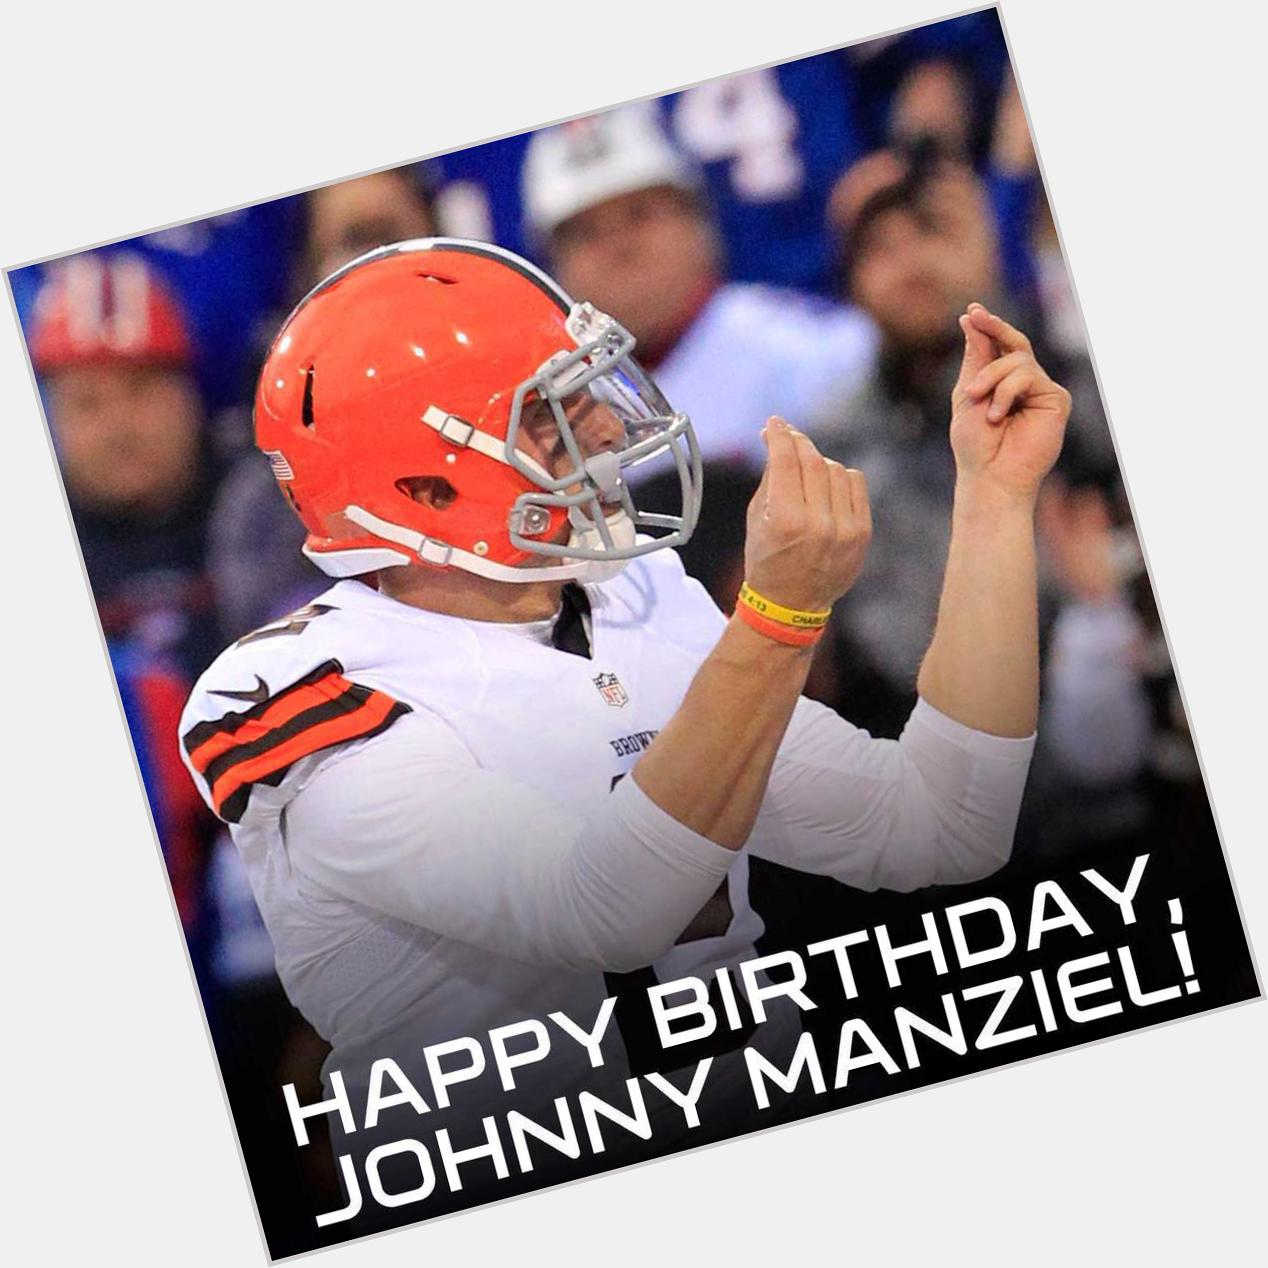  johnny manziel and I wish you a happy birthday 